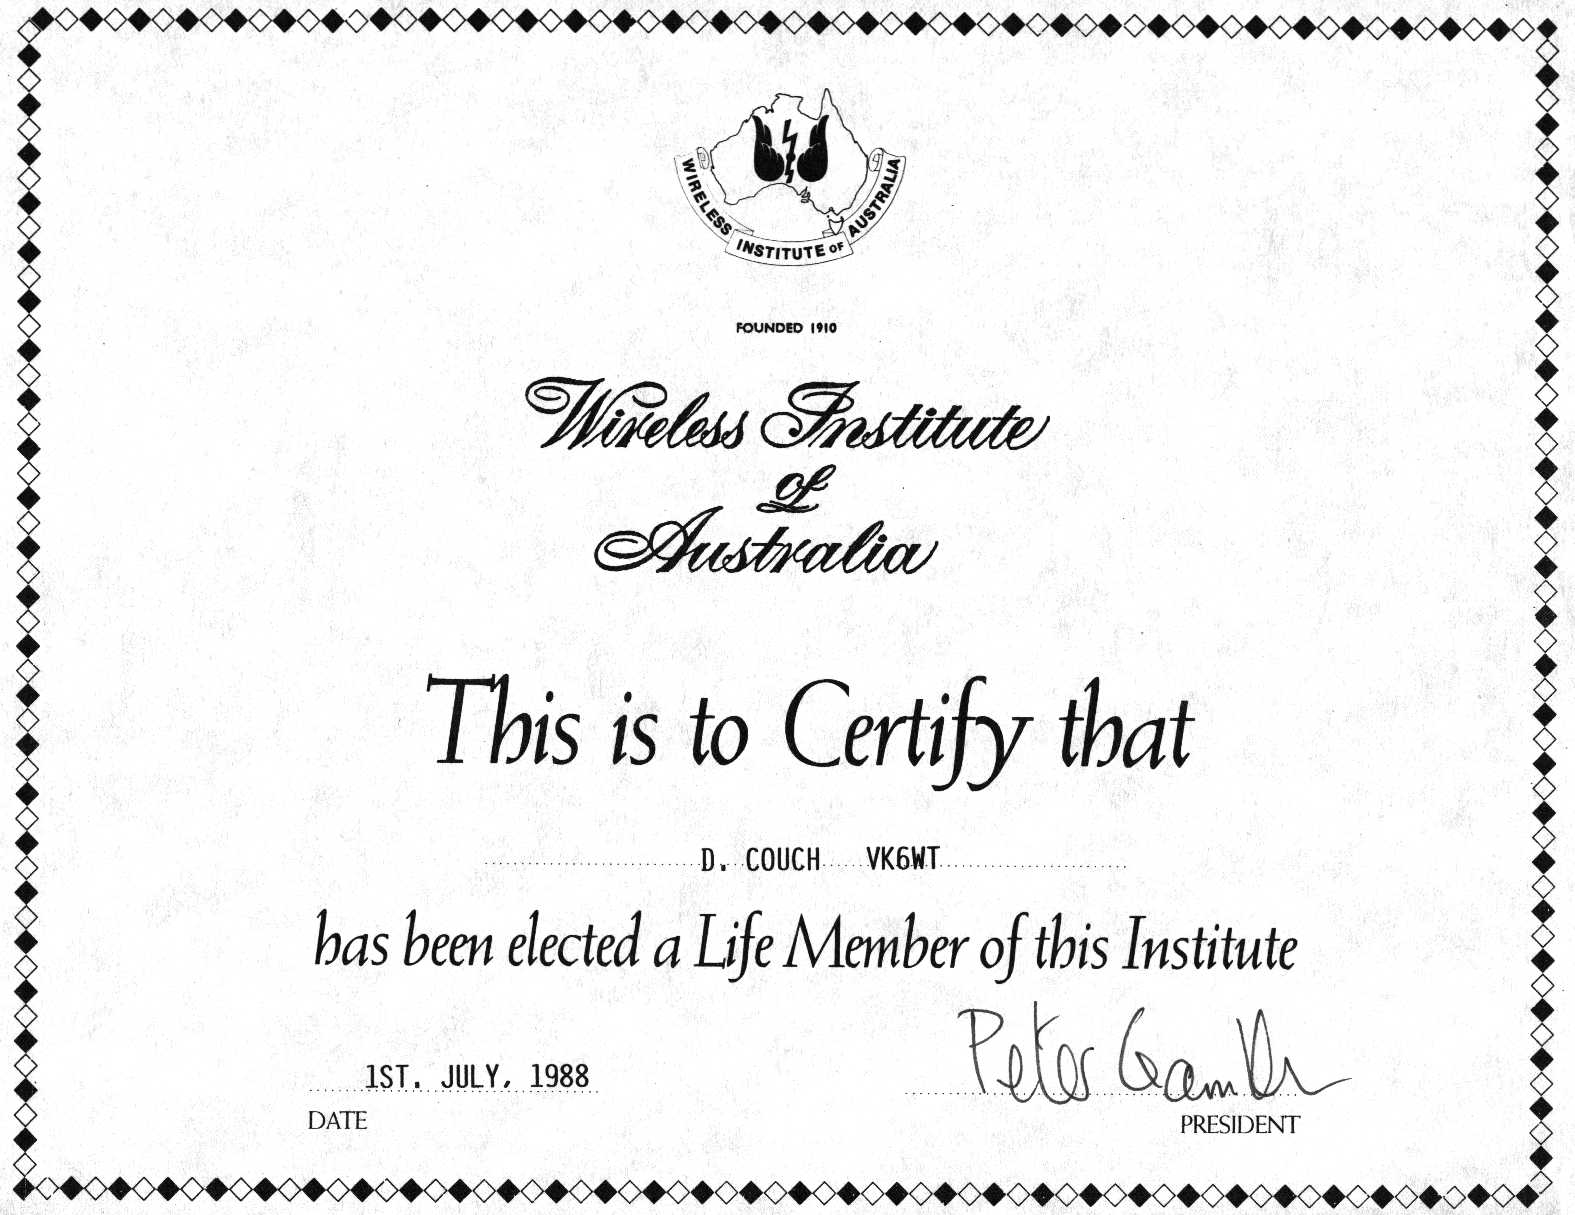 David Couch WIA Life Membership Certificate 1988